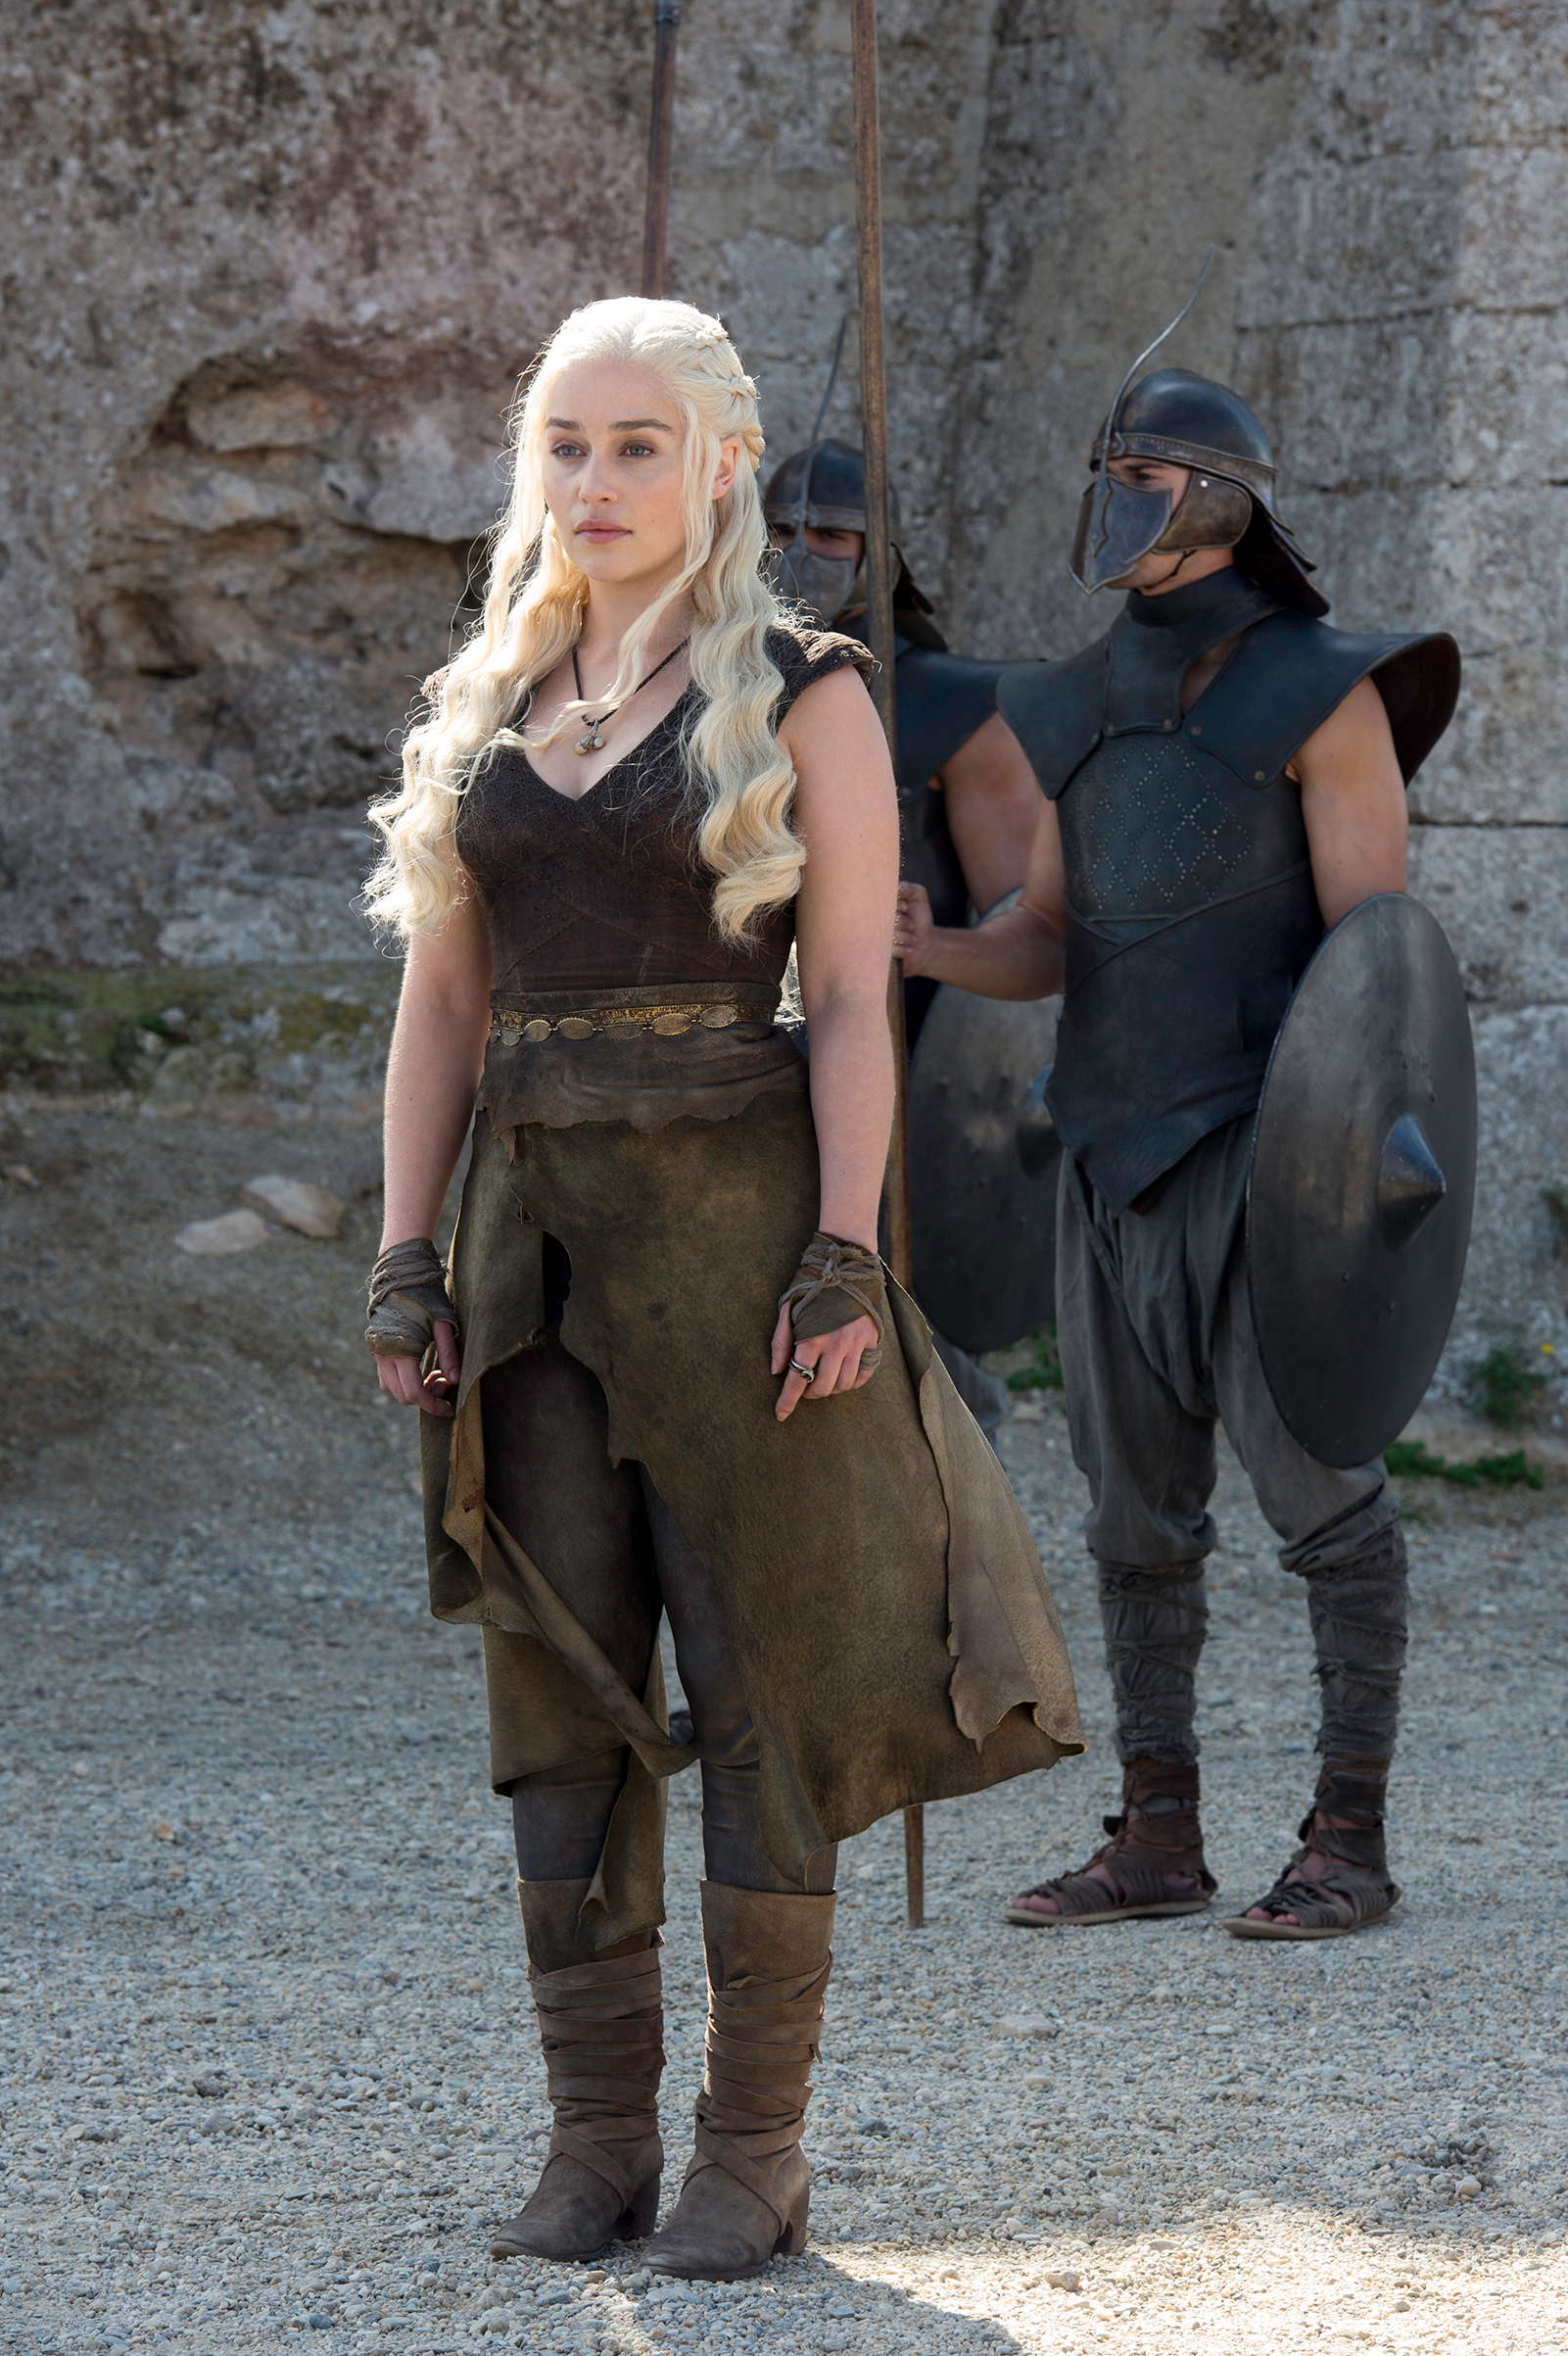 Daenerys Tagaryen in Season 6 of Game of Thrones